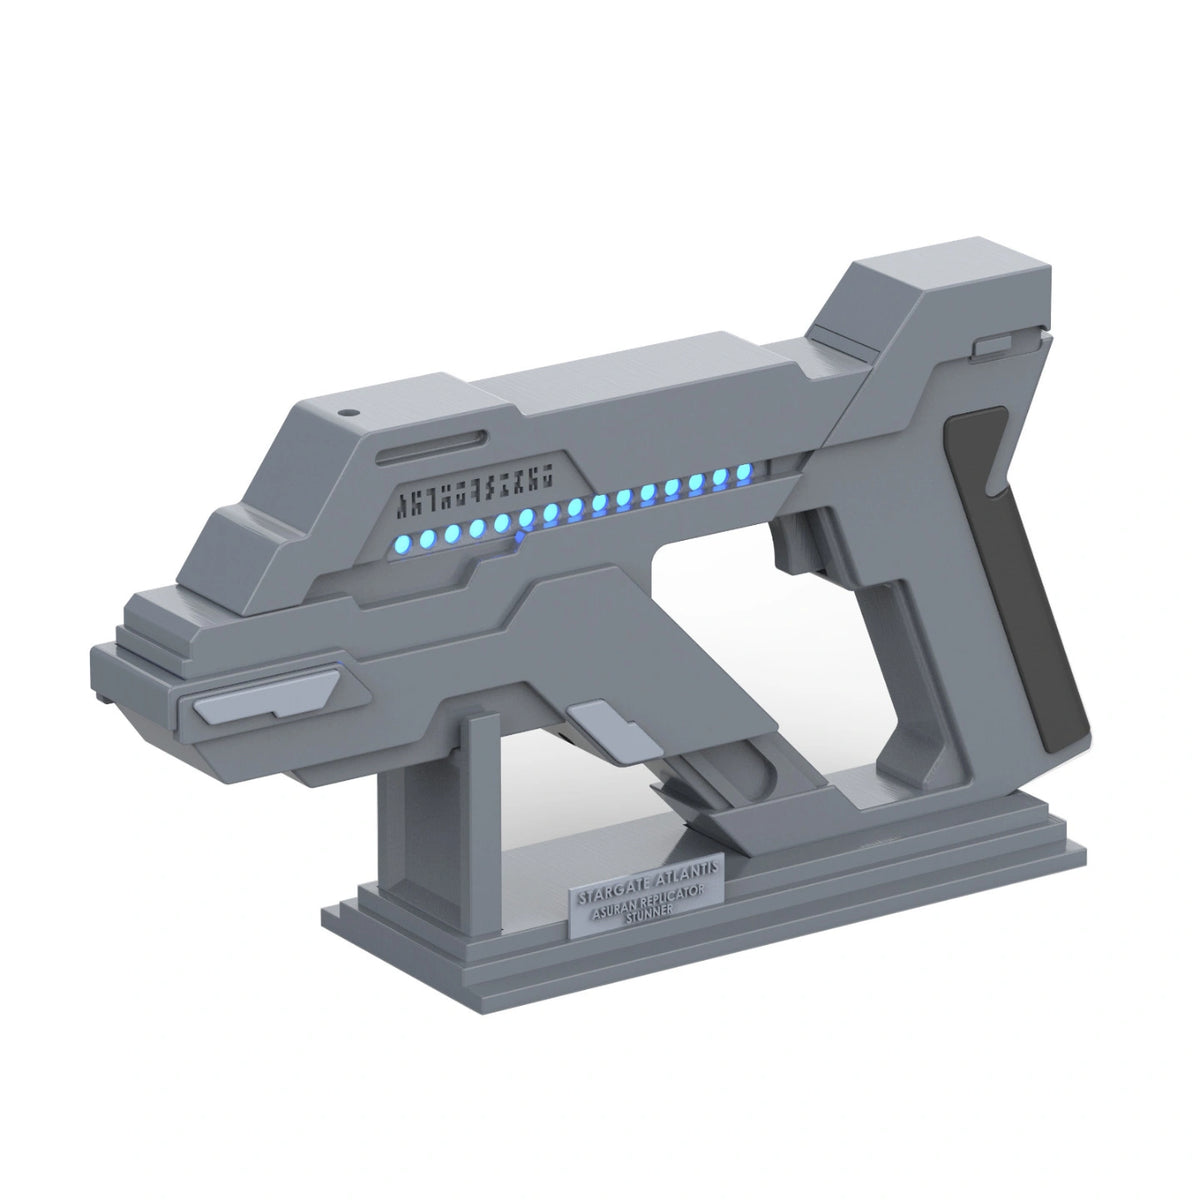 Asuran Replicator Stunner - Stargate - DIY KIT - With Stand